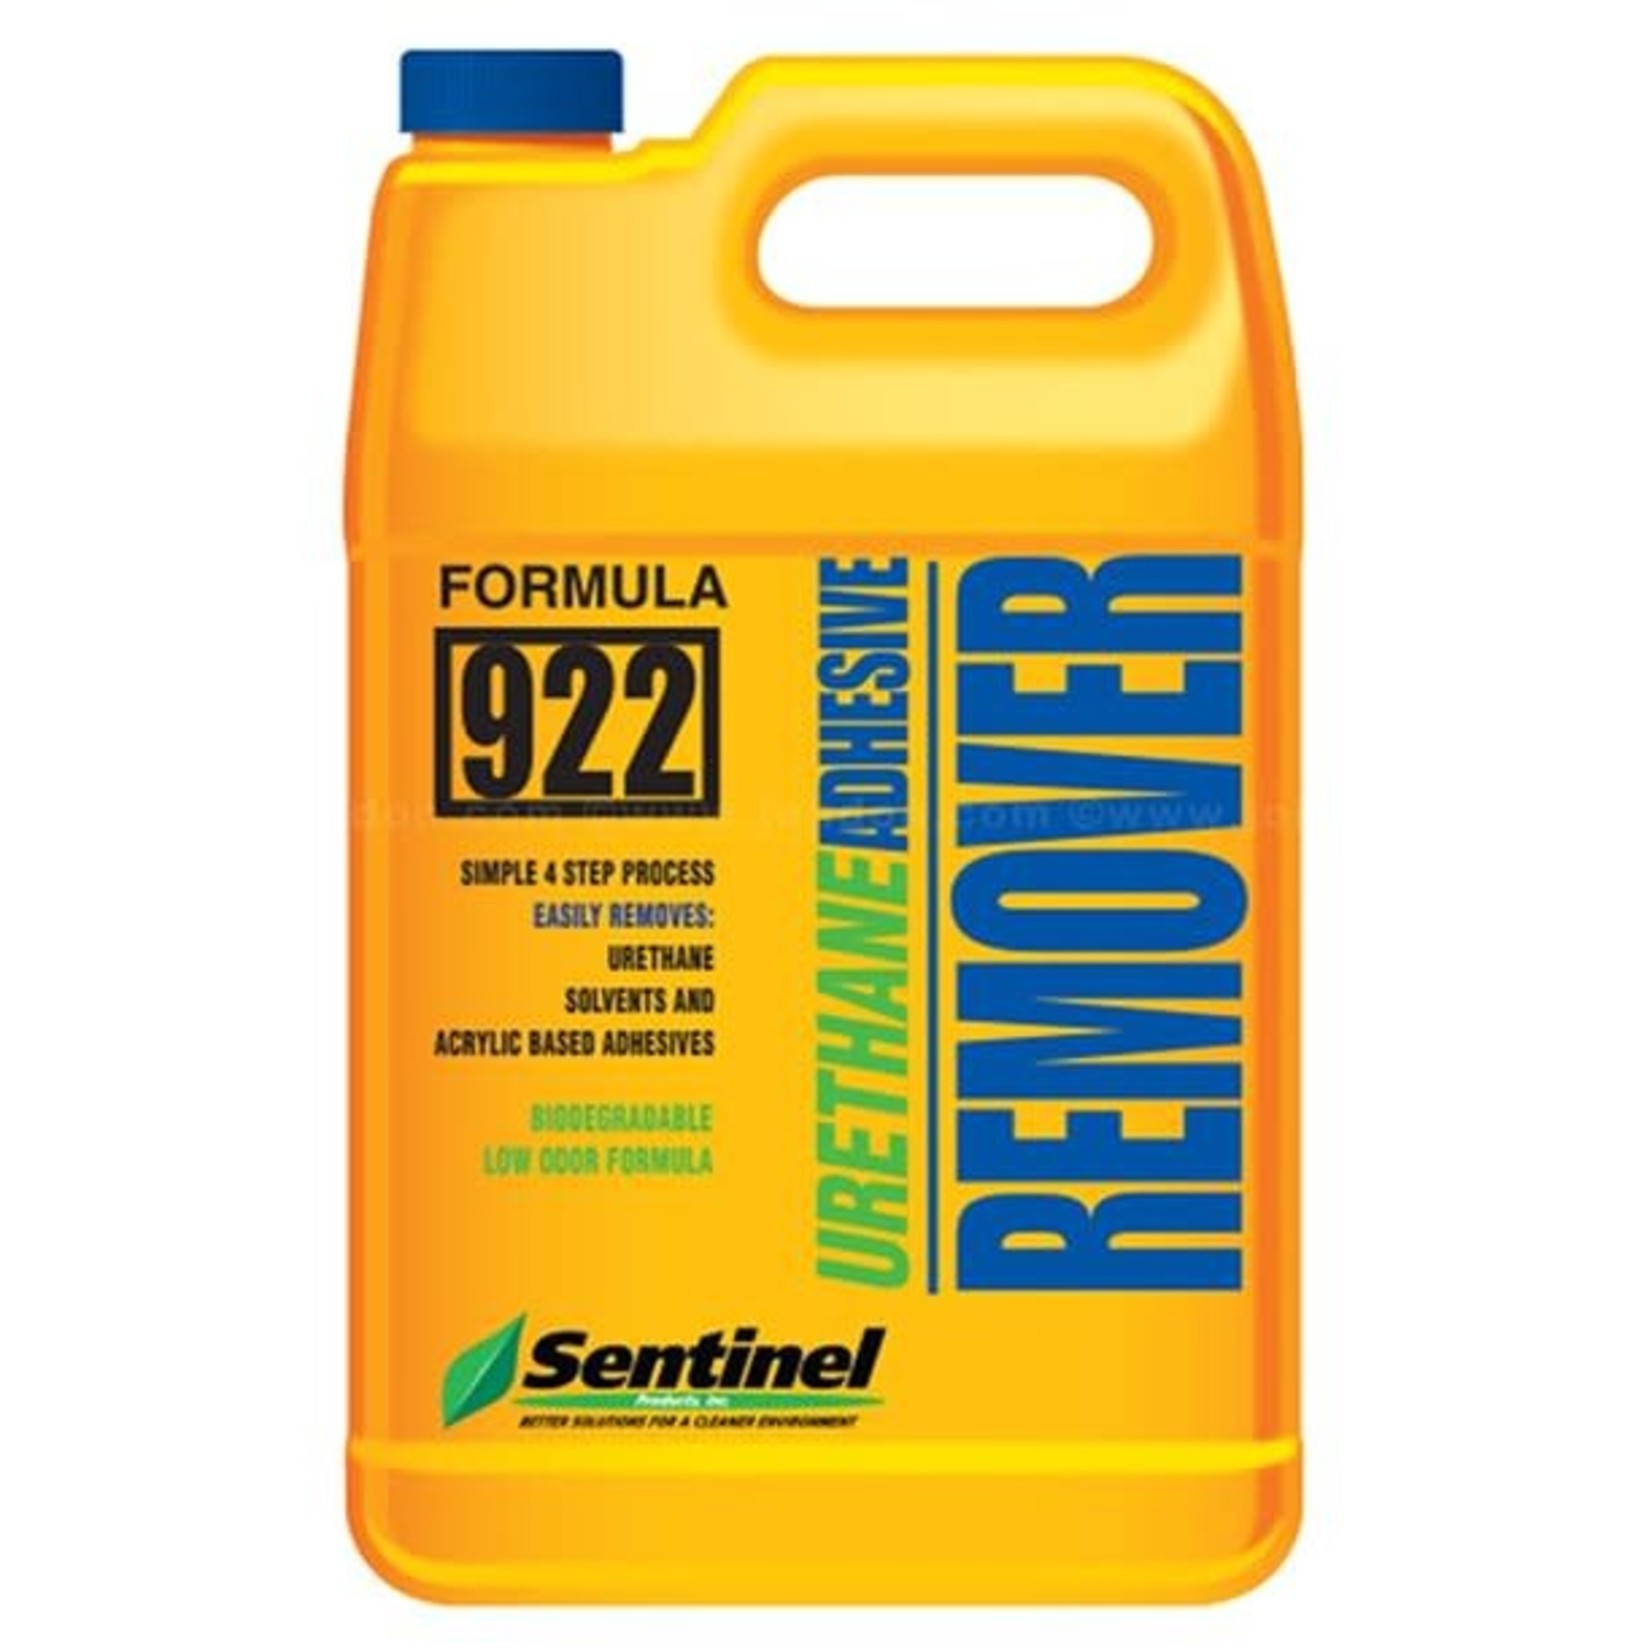 Sentinel Sentinel Formula 922 (Urethane Adhesive Remover)